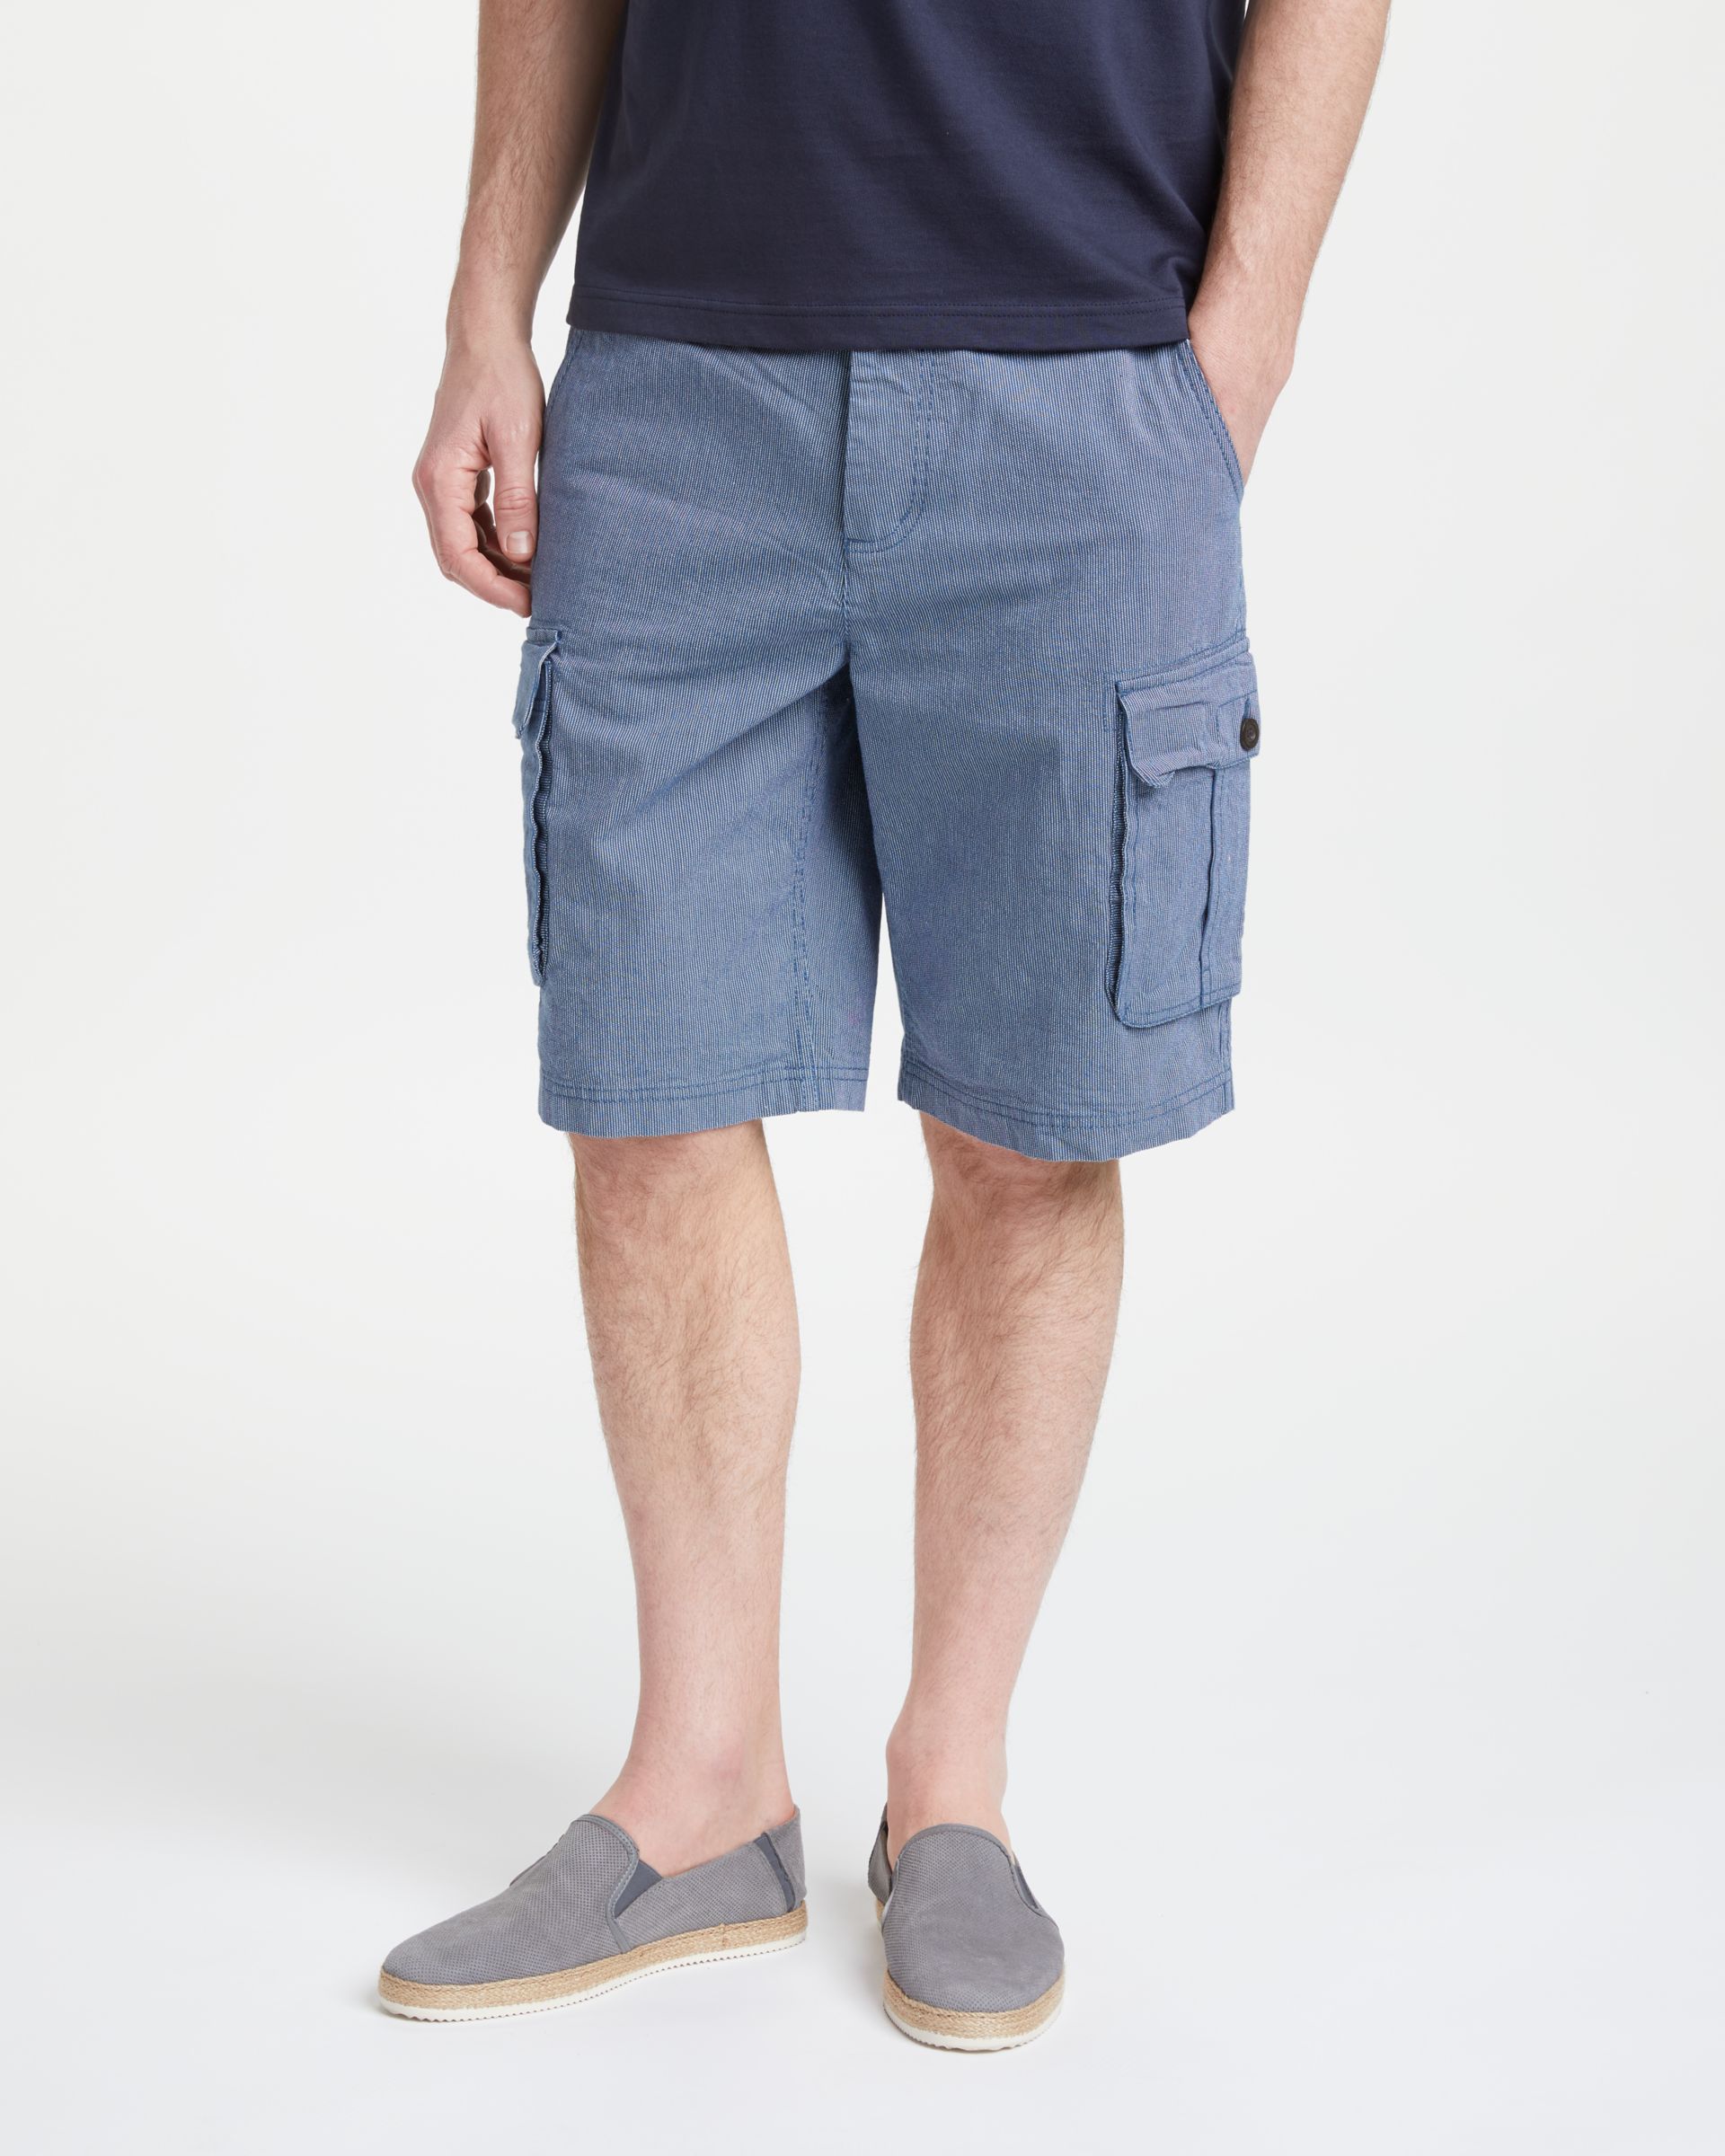 John Lewis & Partners Stripe Cotton Cargo Shorts, Blue, 32R